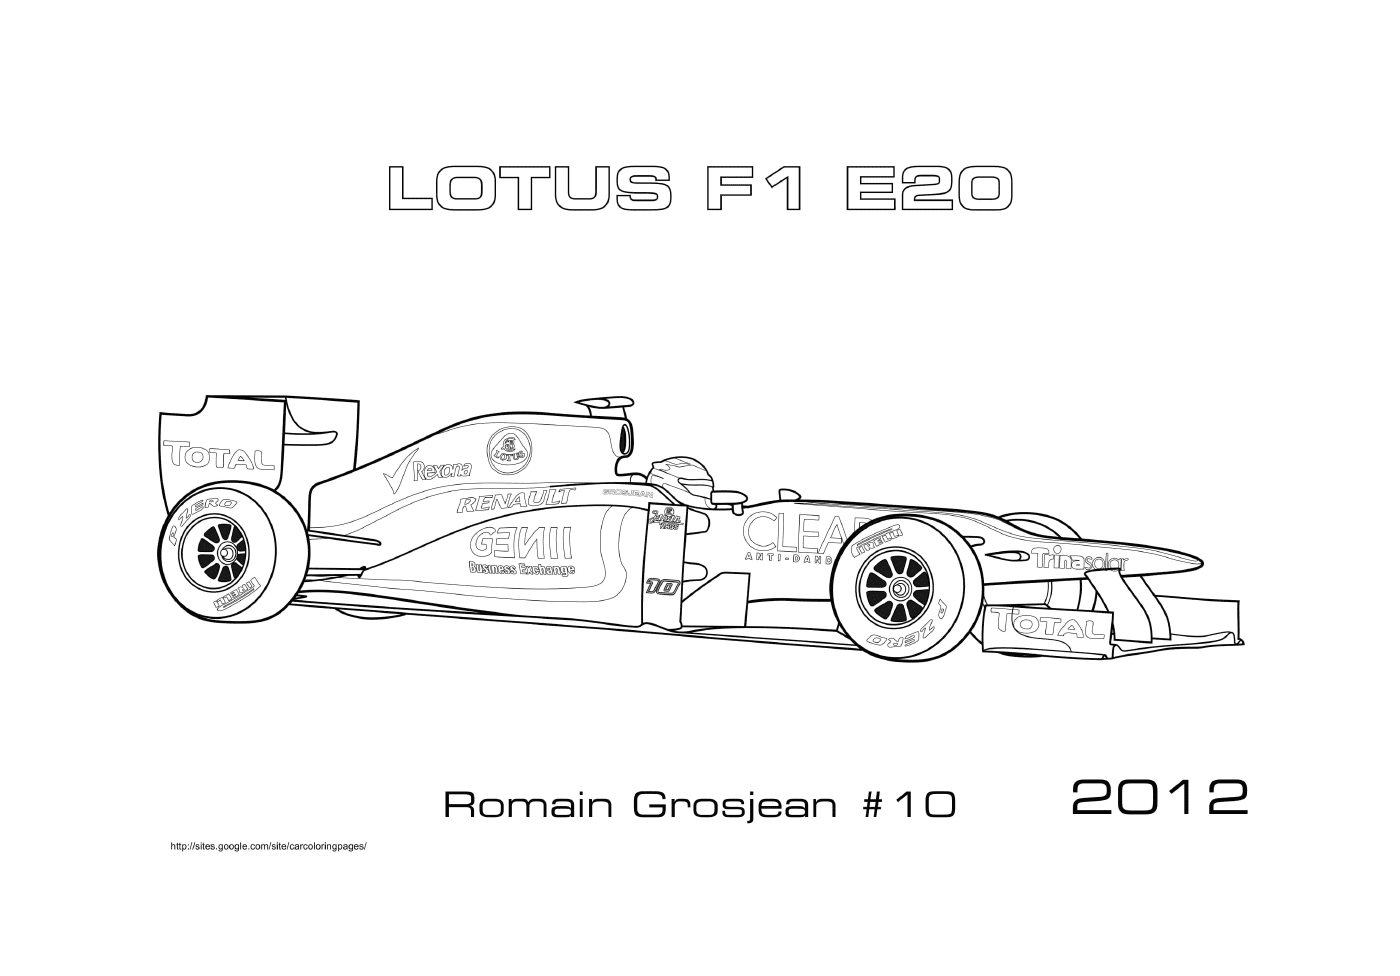   Lotus E20 Romain Grosjean 2012, voiture de Formule 1 